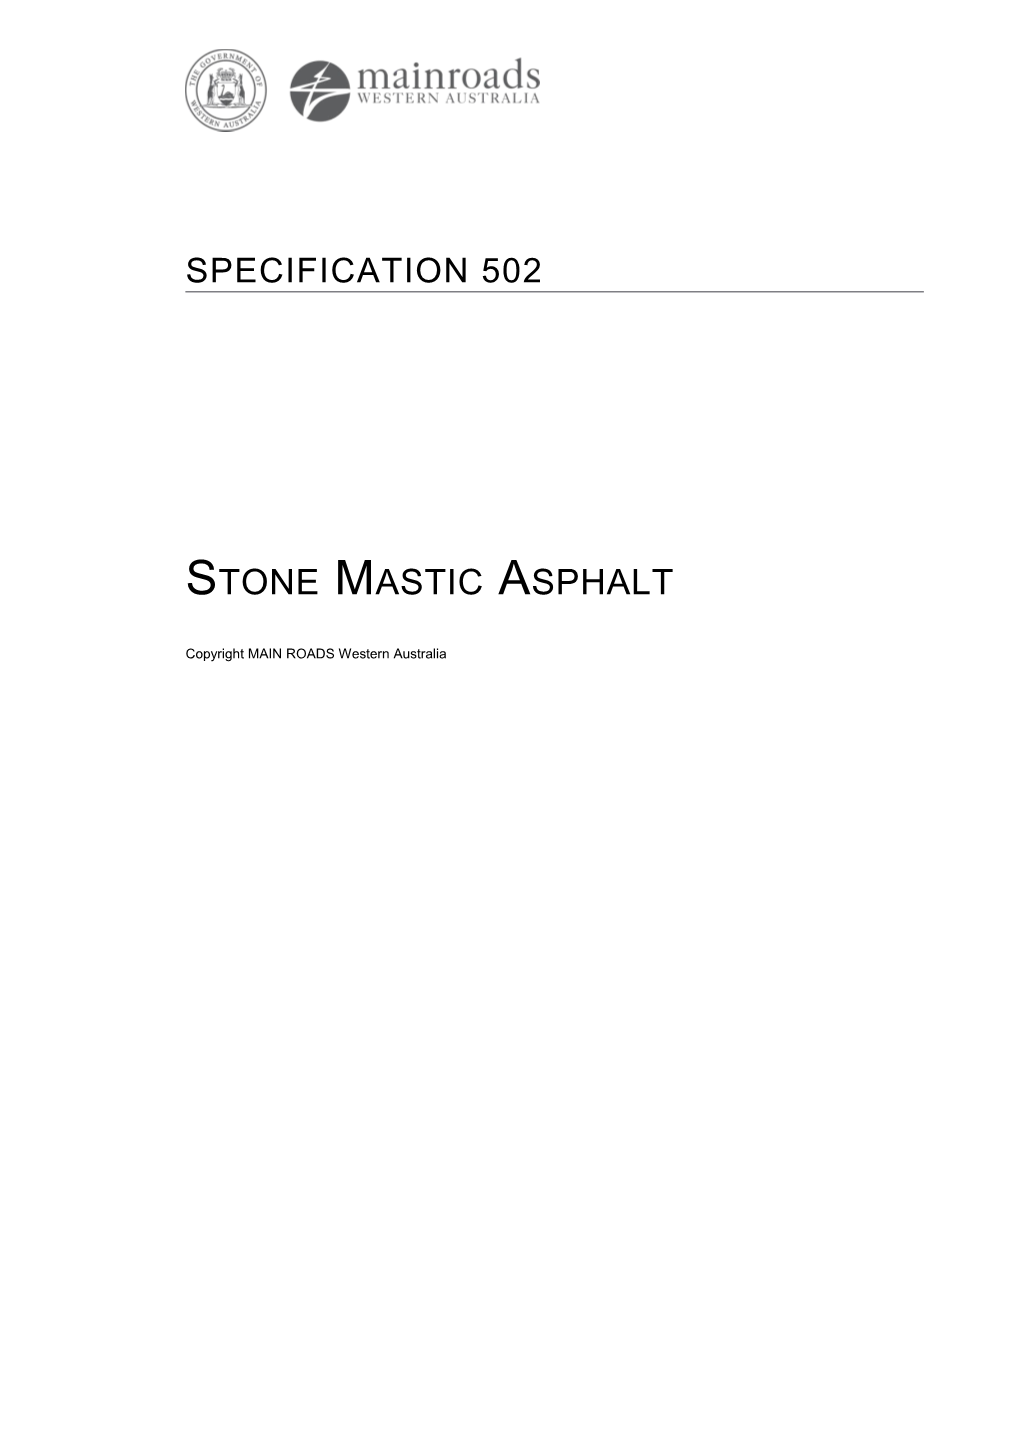 Specification 502 Stone Mastic Asphalt 05/8797 13/05/2016